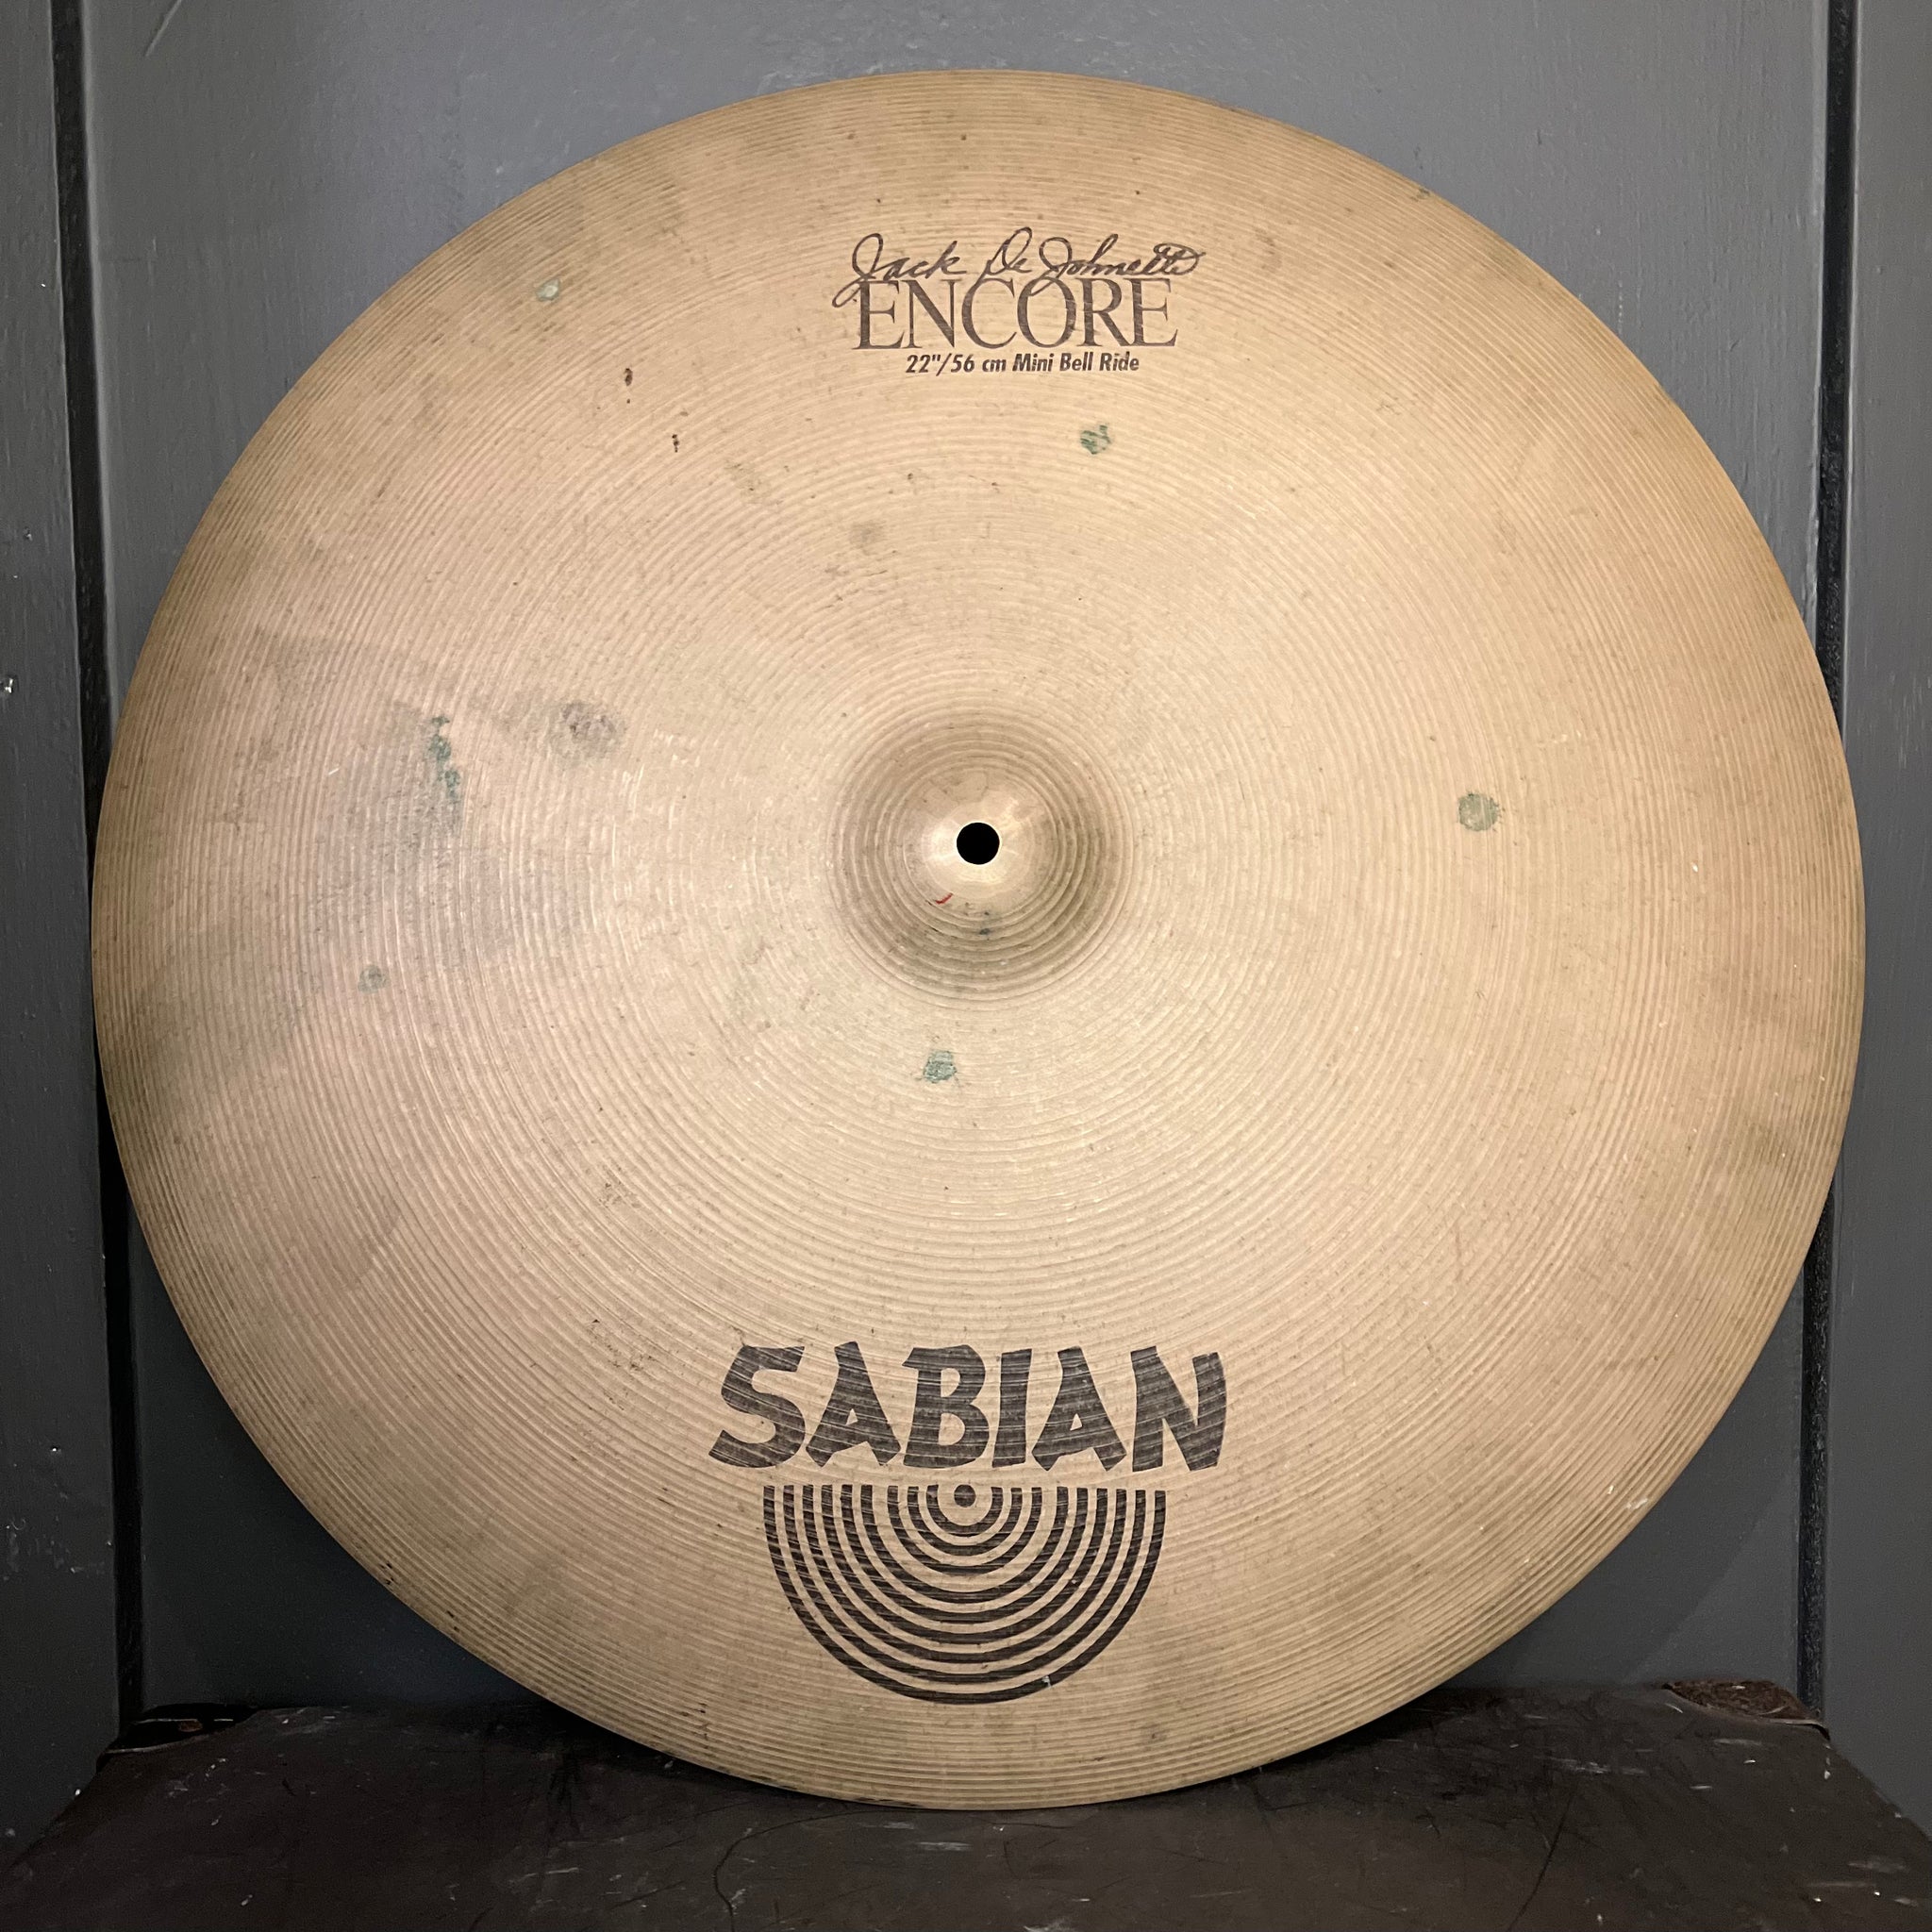 USED Sabian 22" Jack DeJohnette Encore Mini-Bell Ride Cymbal - 2656